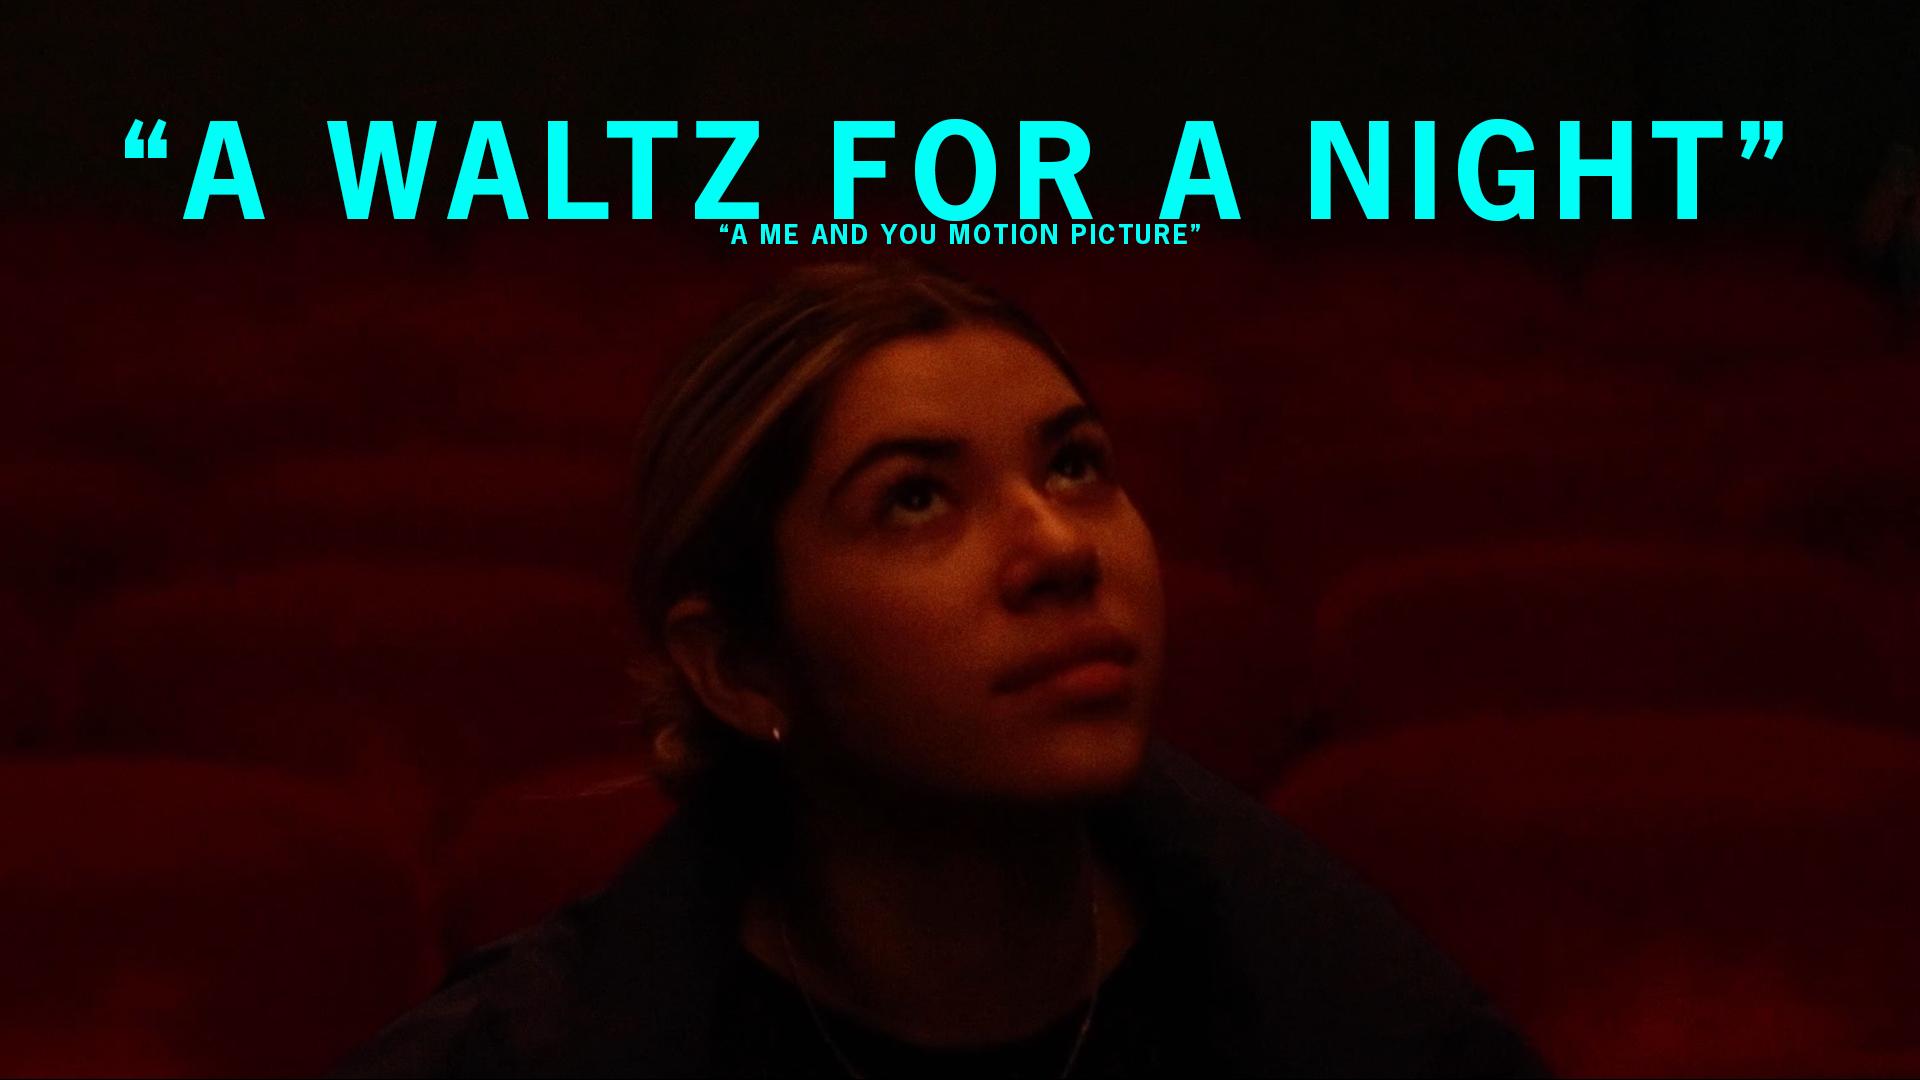 "A WALTZ FOR A NIGHT"